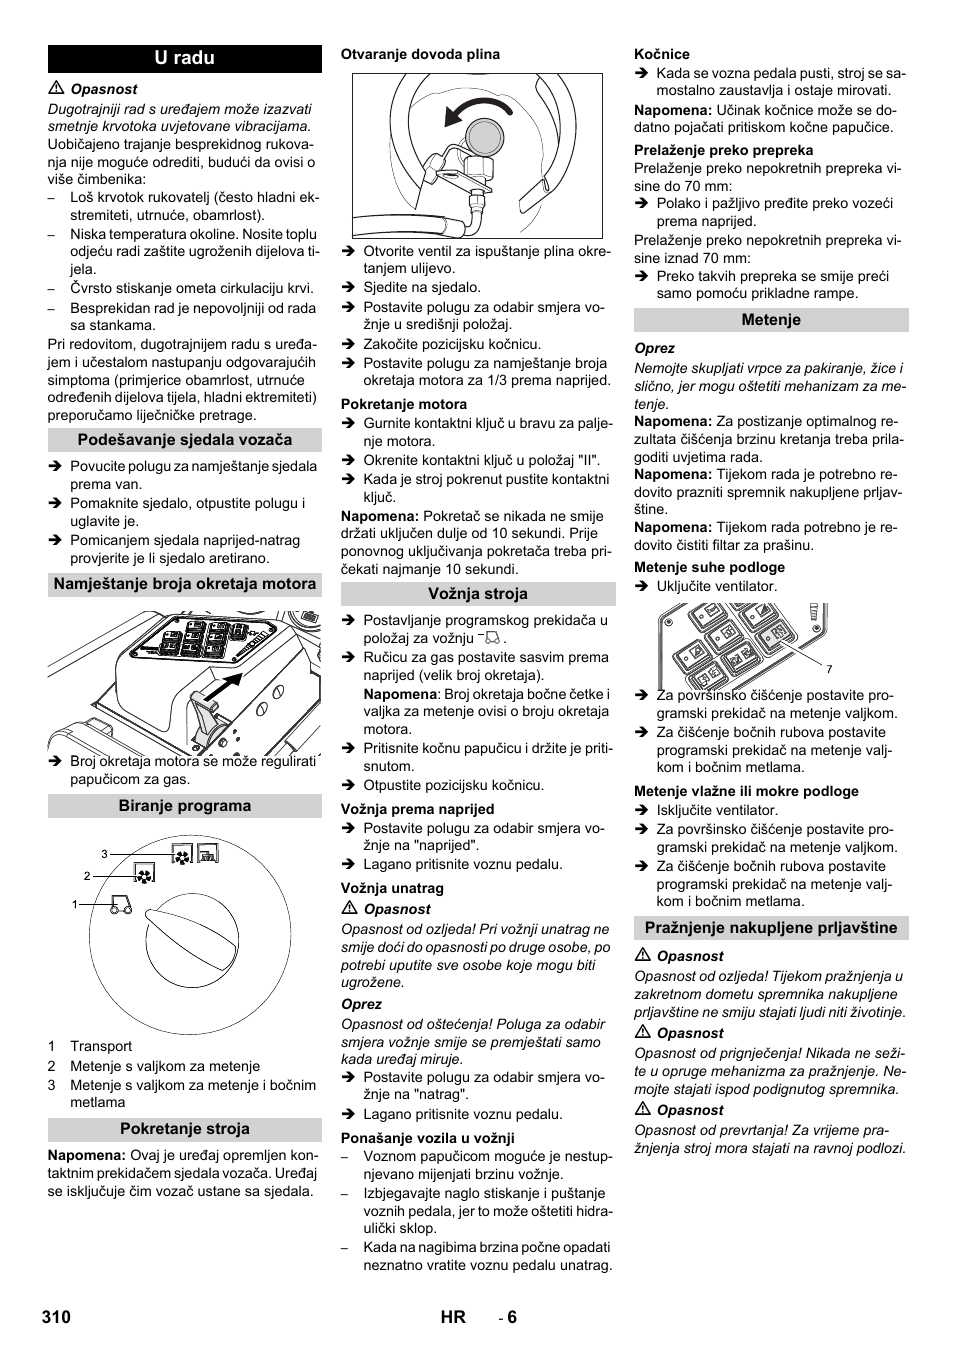 U radu | Karcher KM 130-300 R Lpg User Manual | Page 310 / 448 | Original  mode